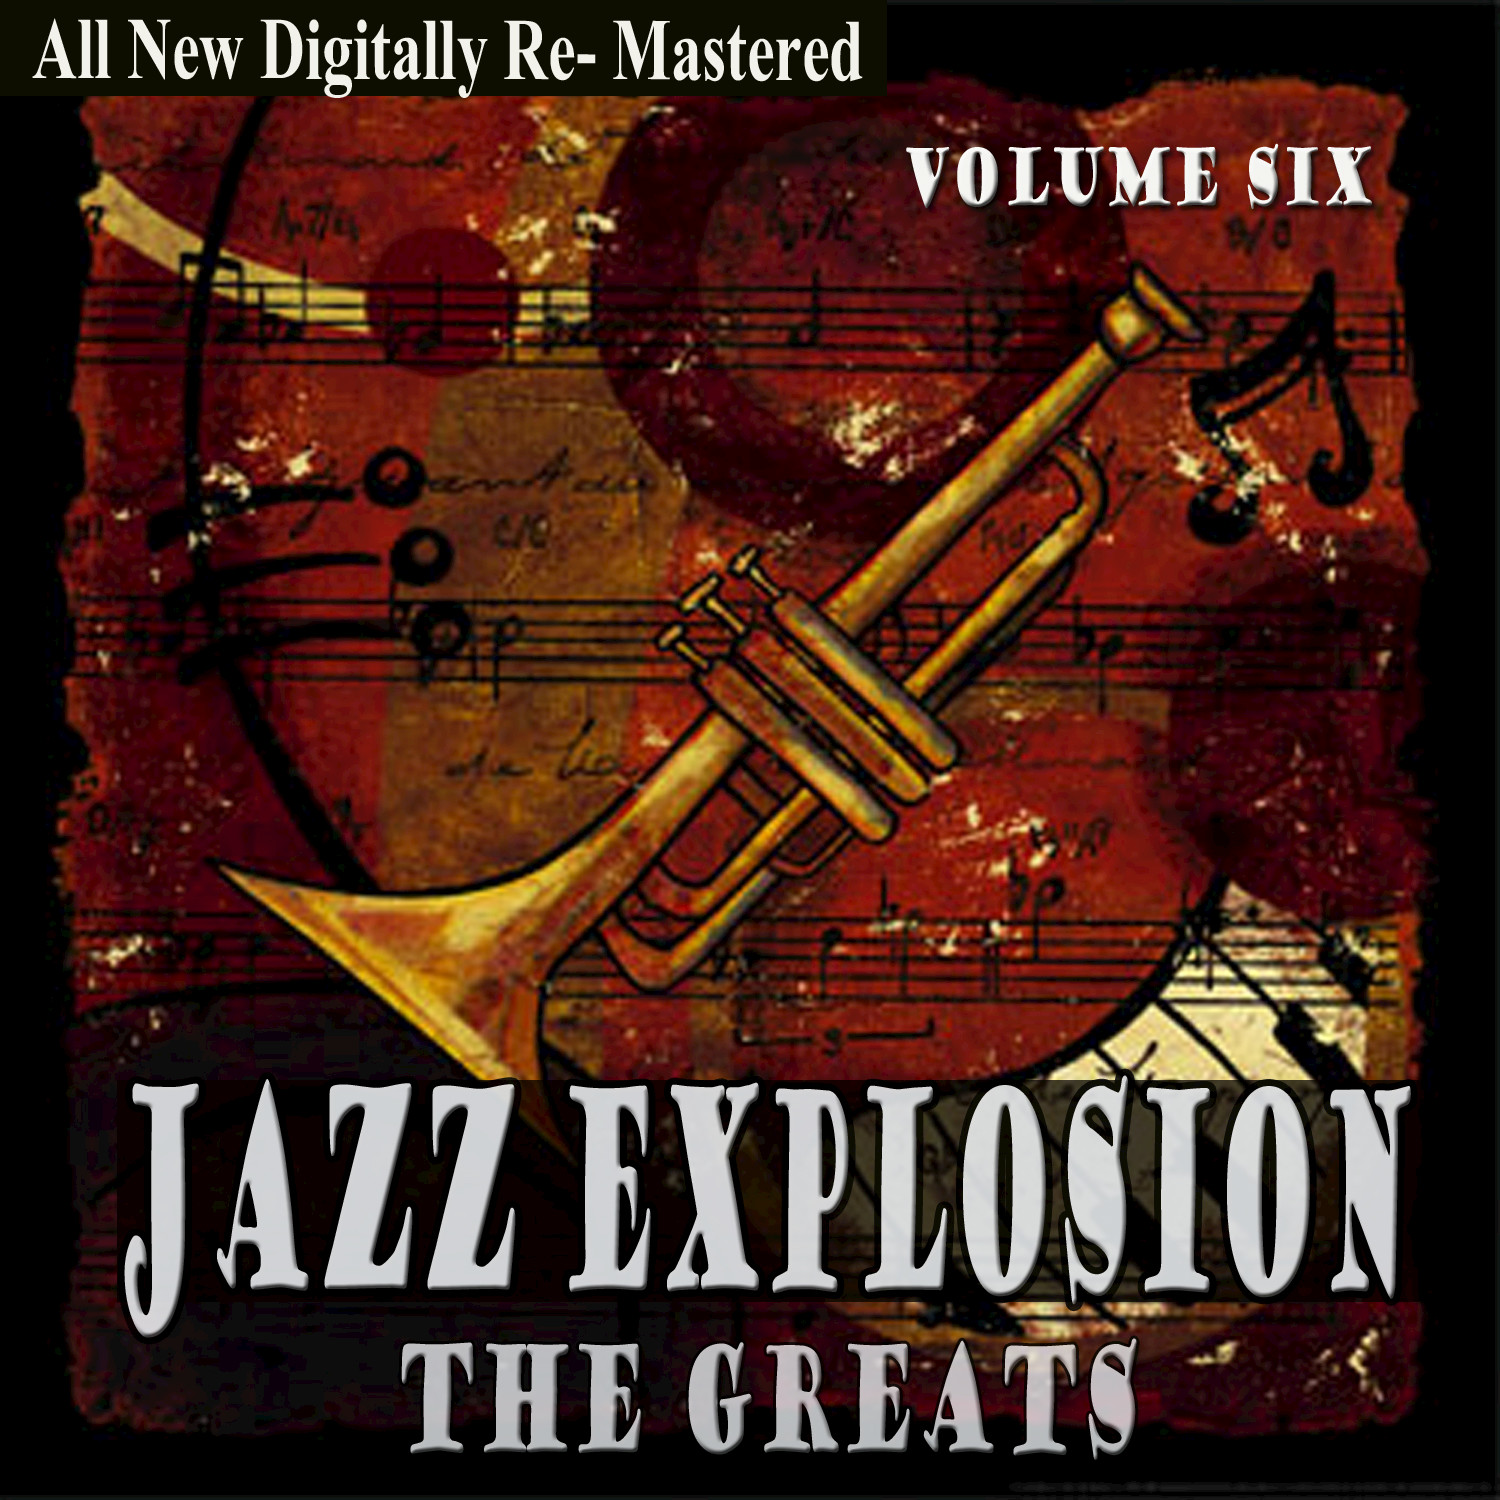 Jazz Explosion - The Greats Volume Six